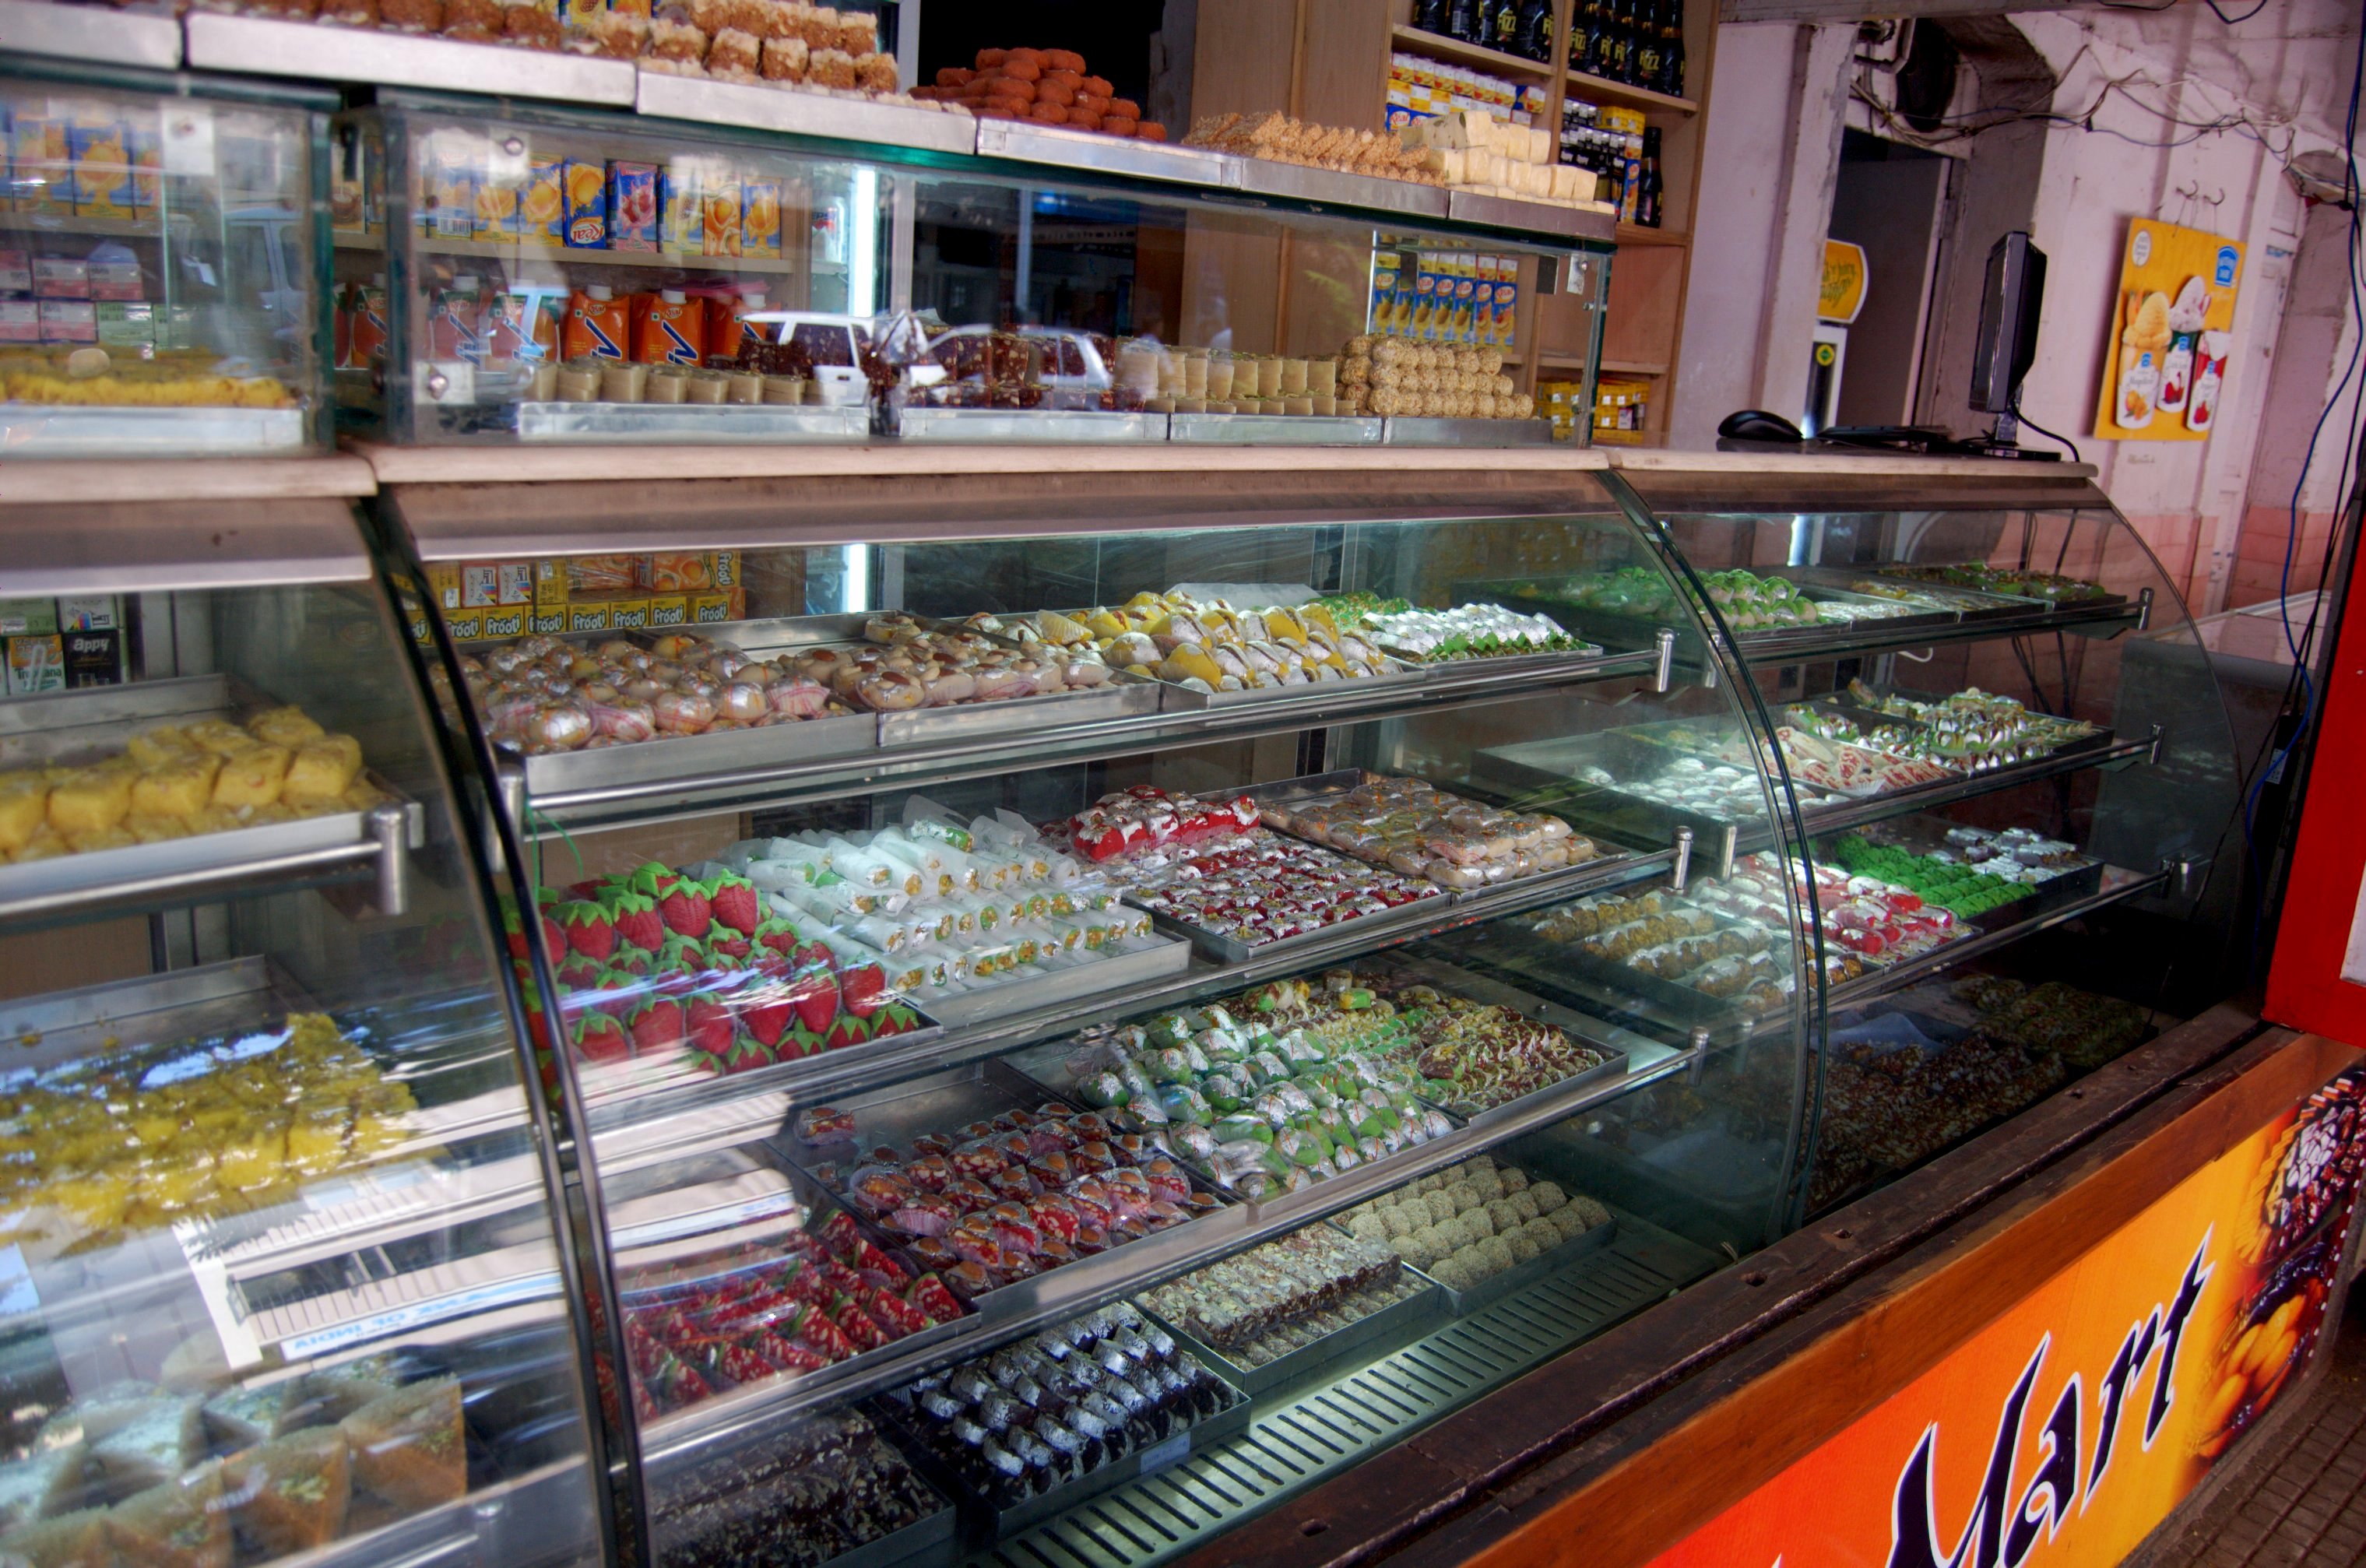 File:Street side sweets shop Goa, India 2009.jpg - Wikimedia Commons